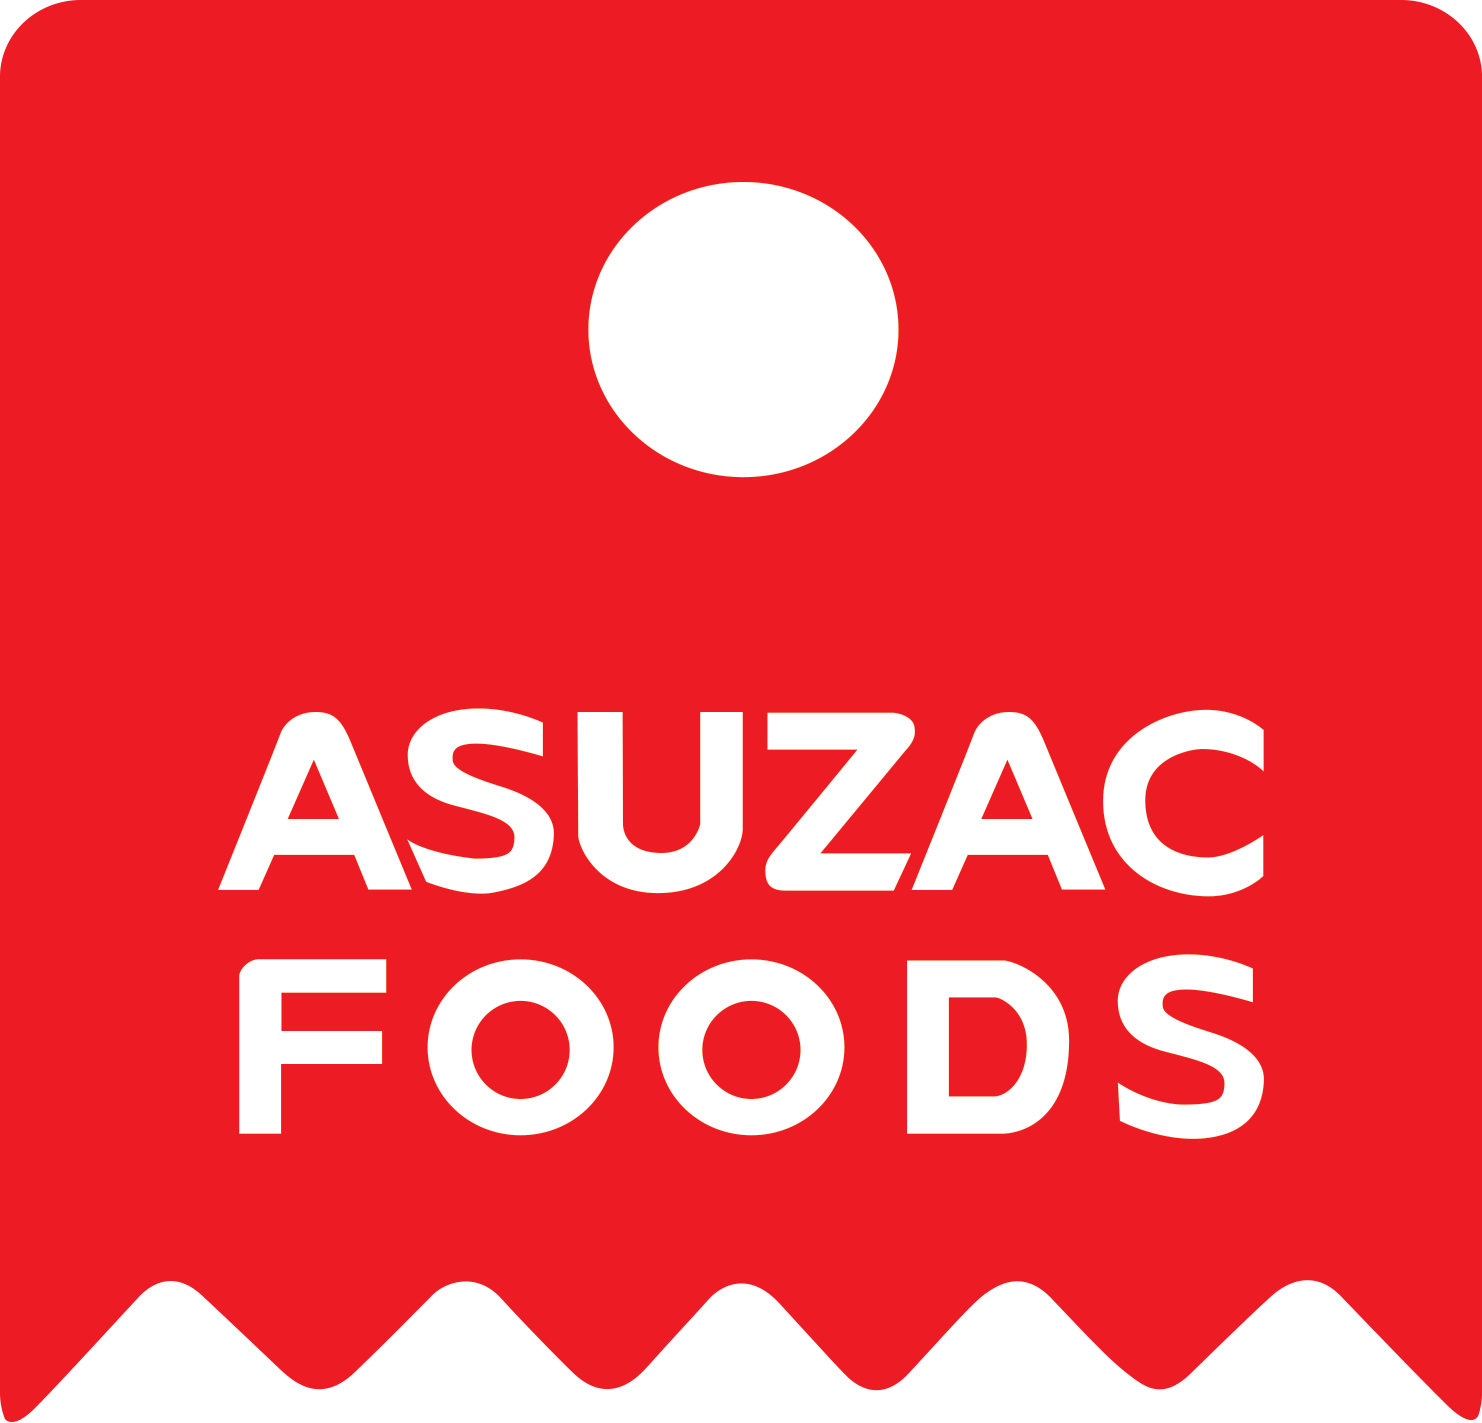 ASUZAC FOODS